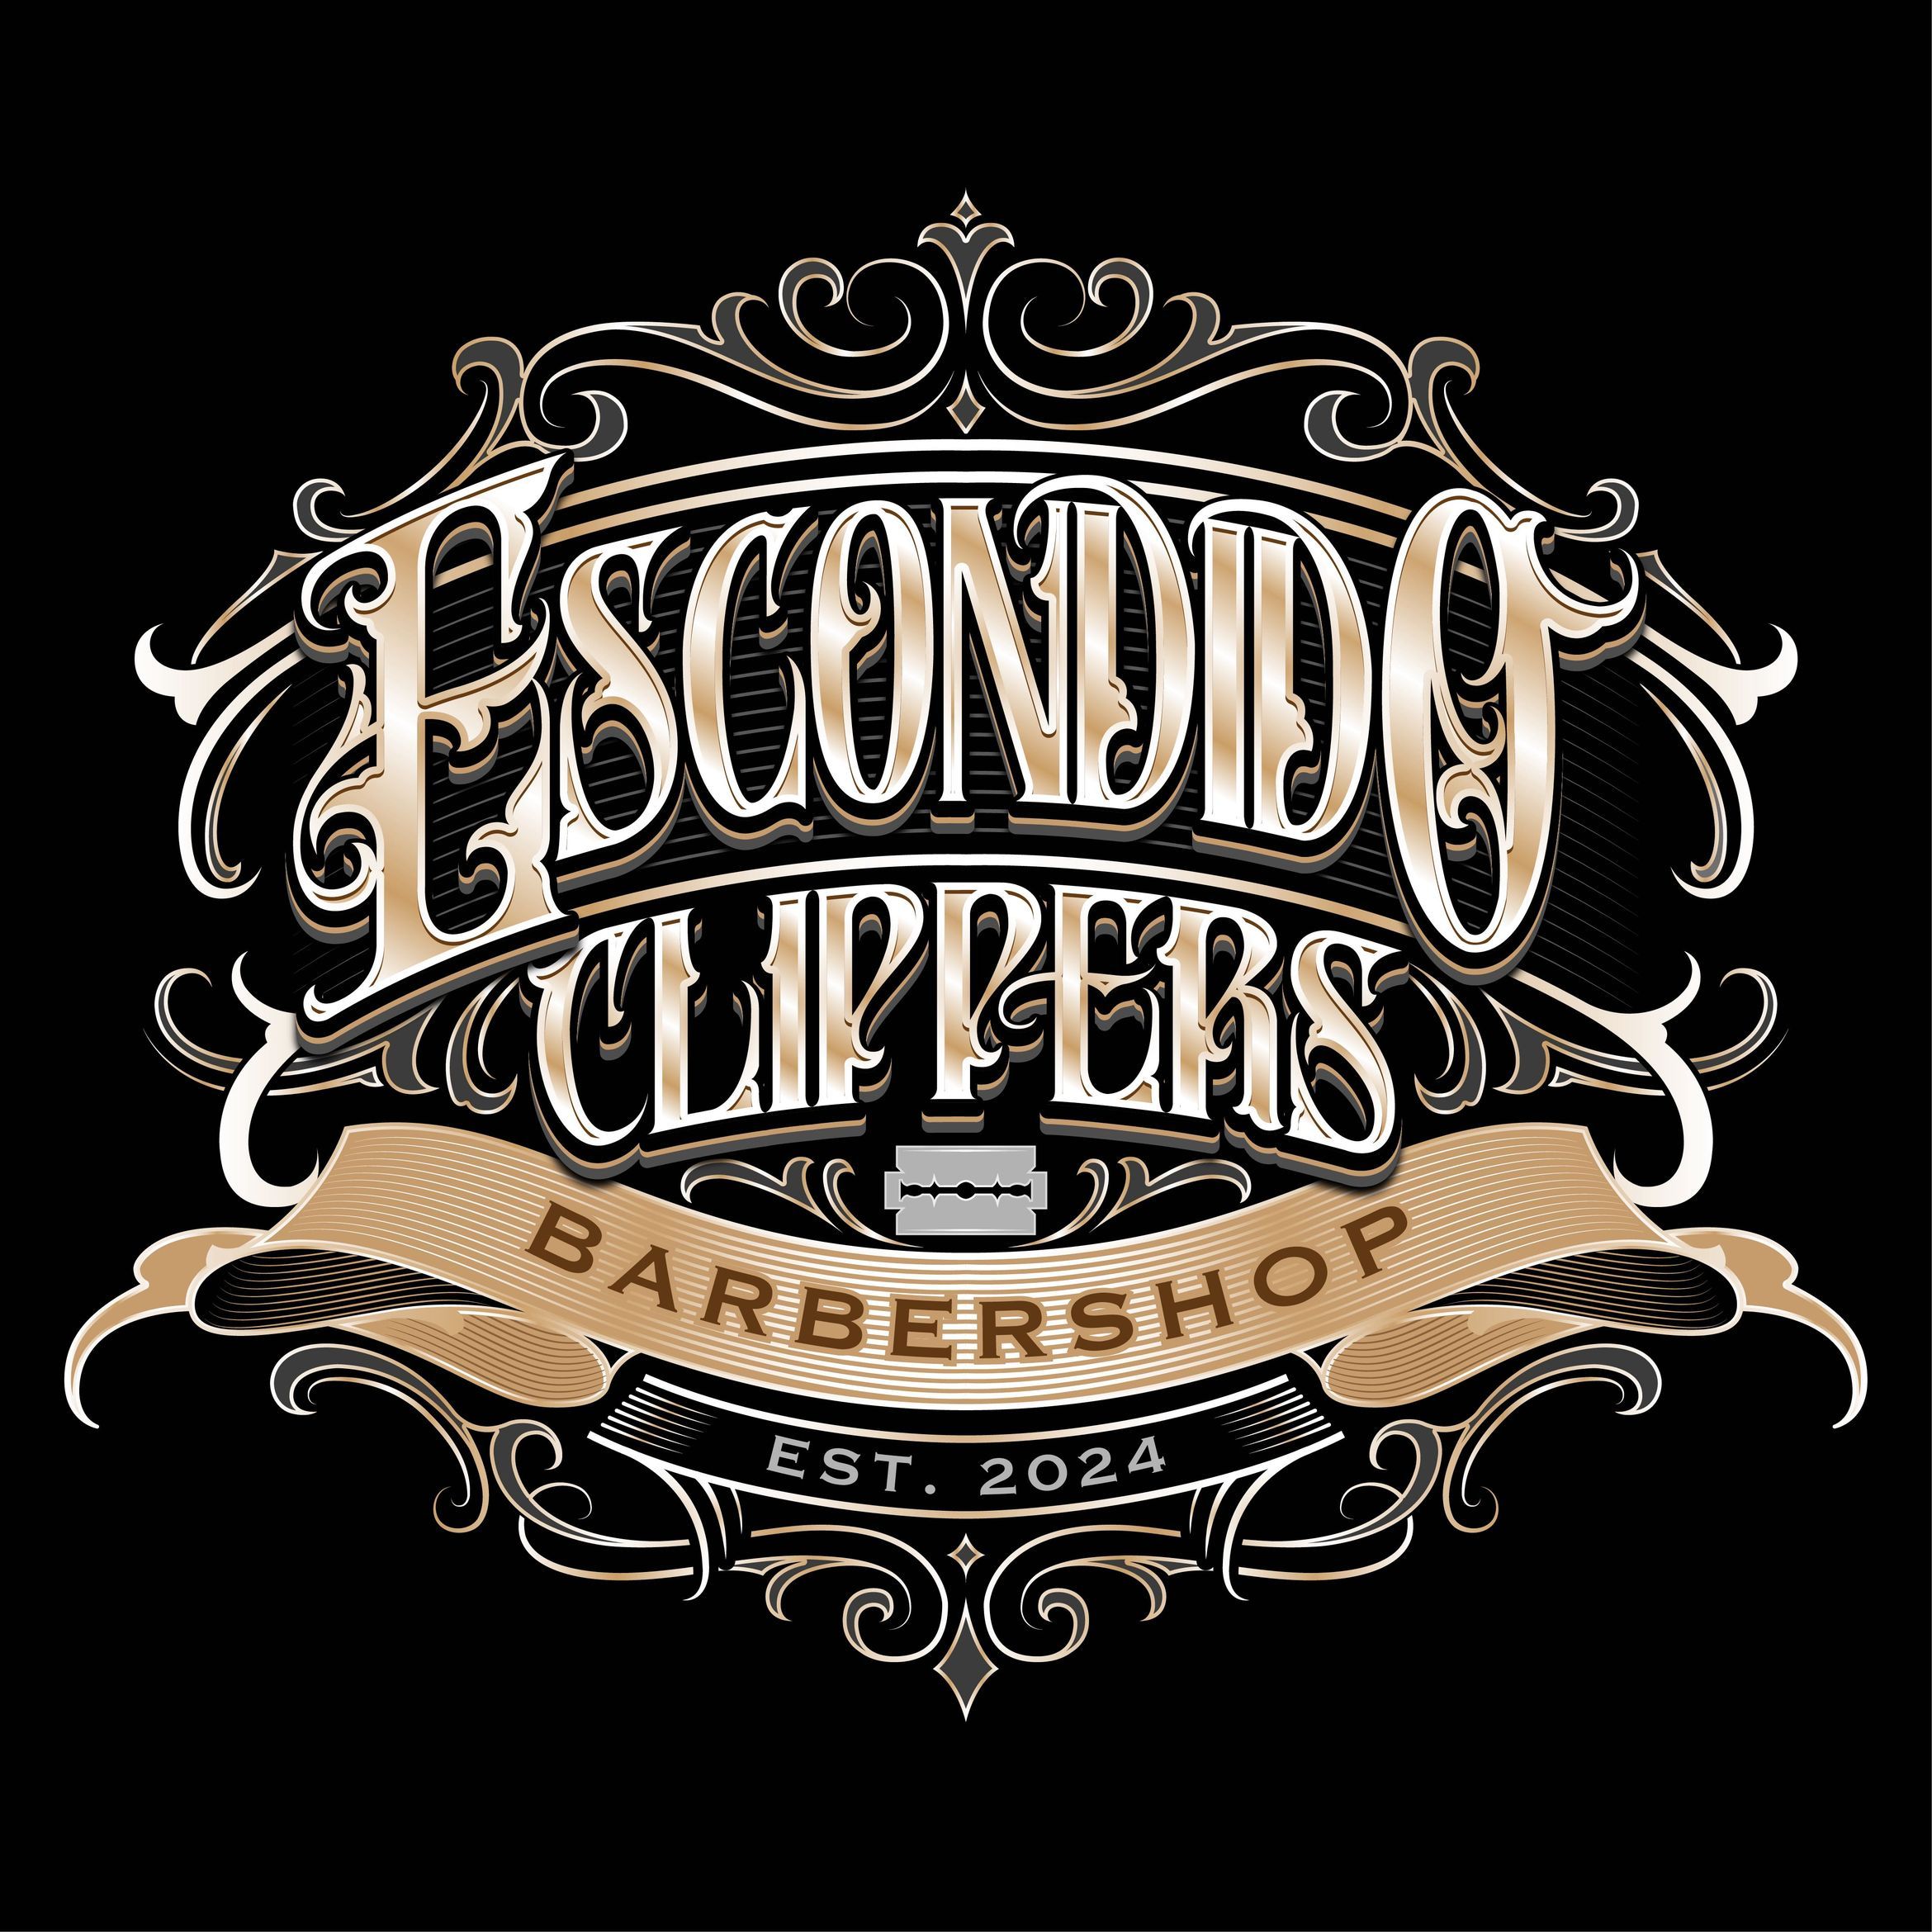 Chris @Escondido Clippers Barbershop, 410 W Felicita ave, Suite D, Escondido, 92025